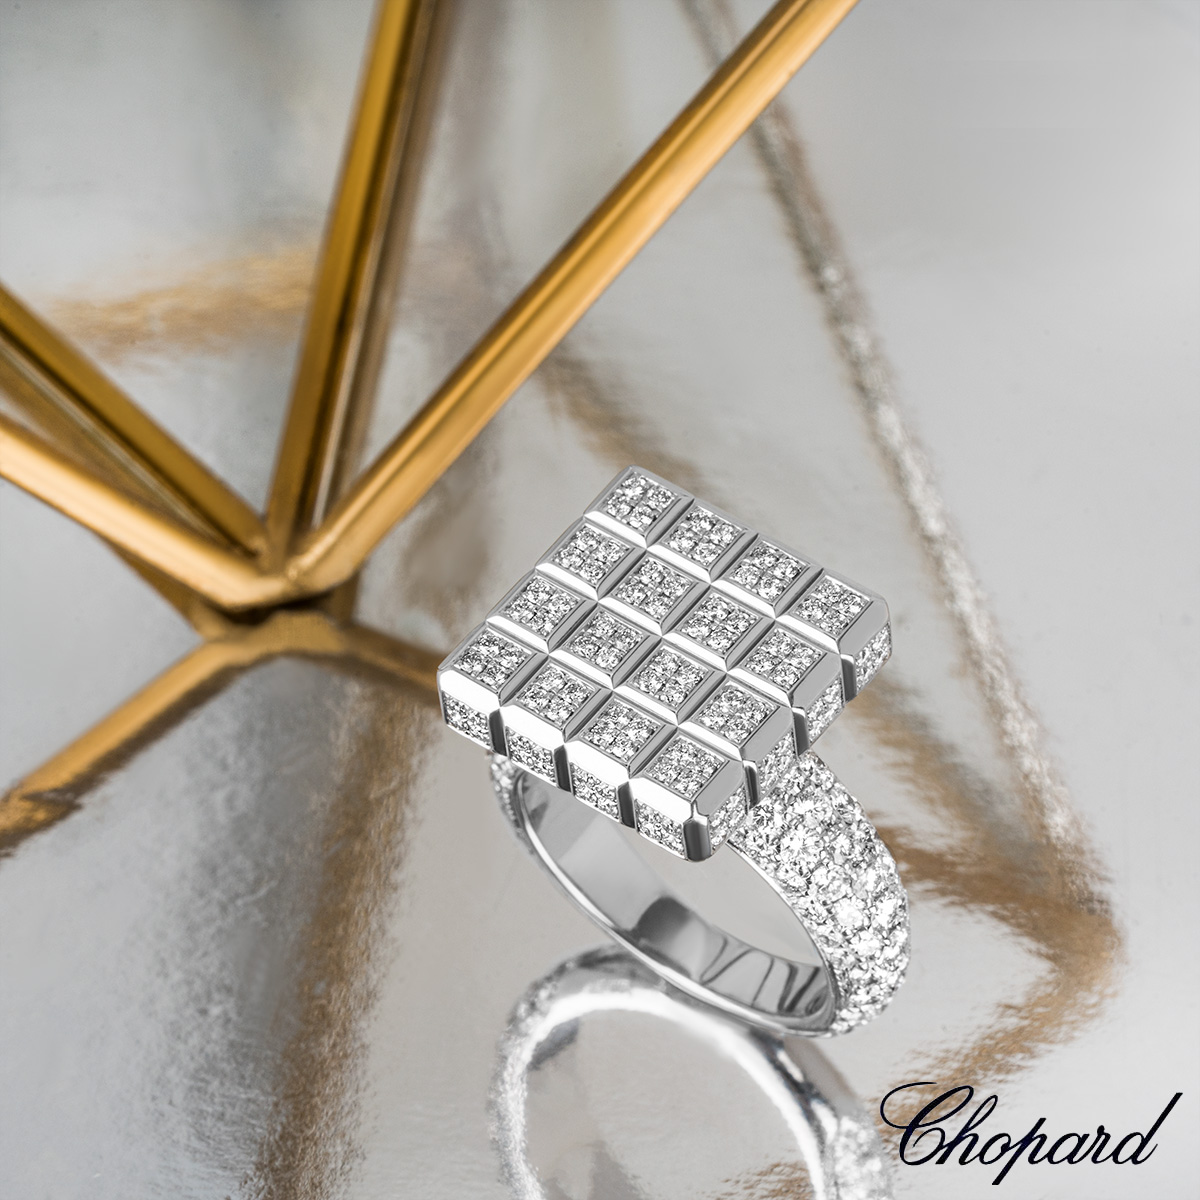 Chopard White Gold Diamond Ice Cube Ring 825442-1109